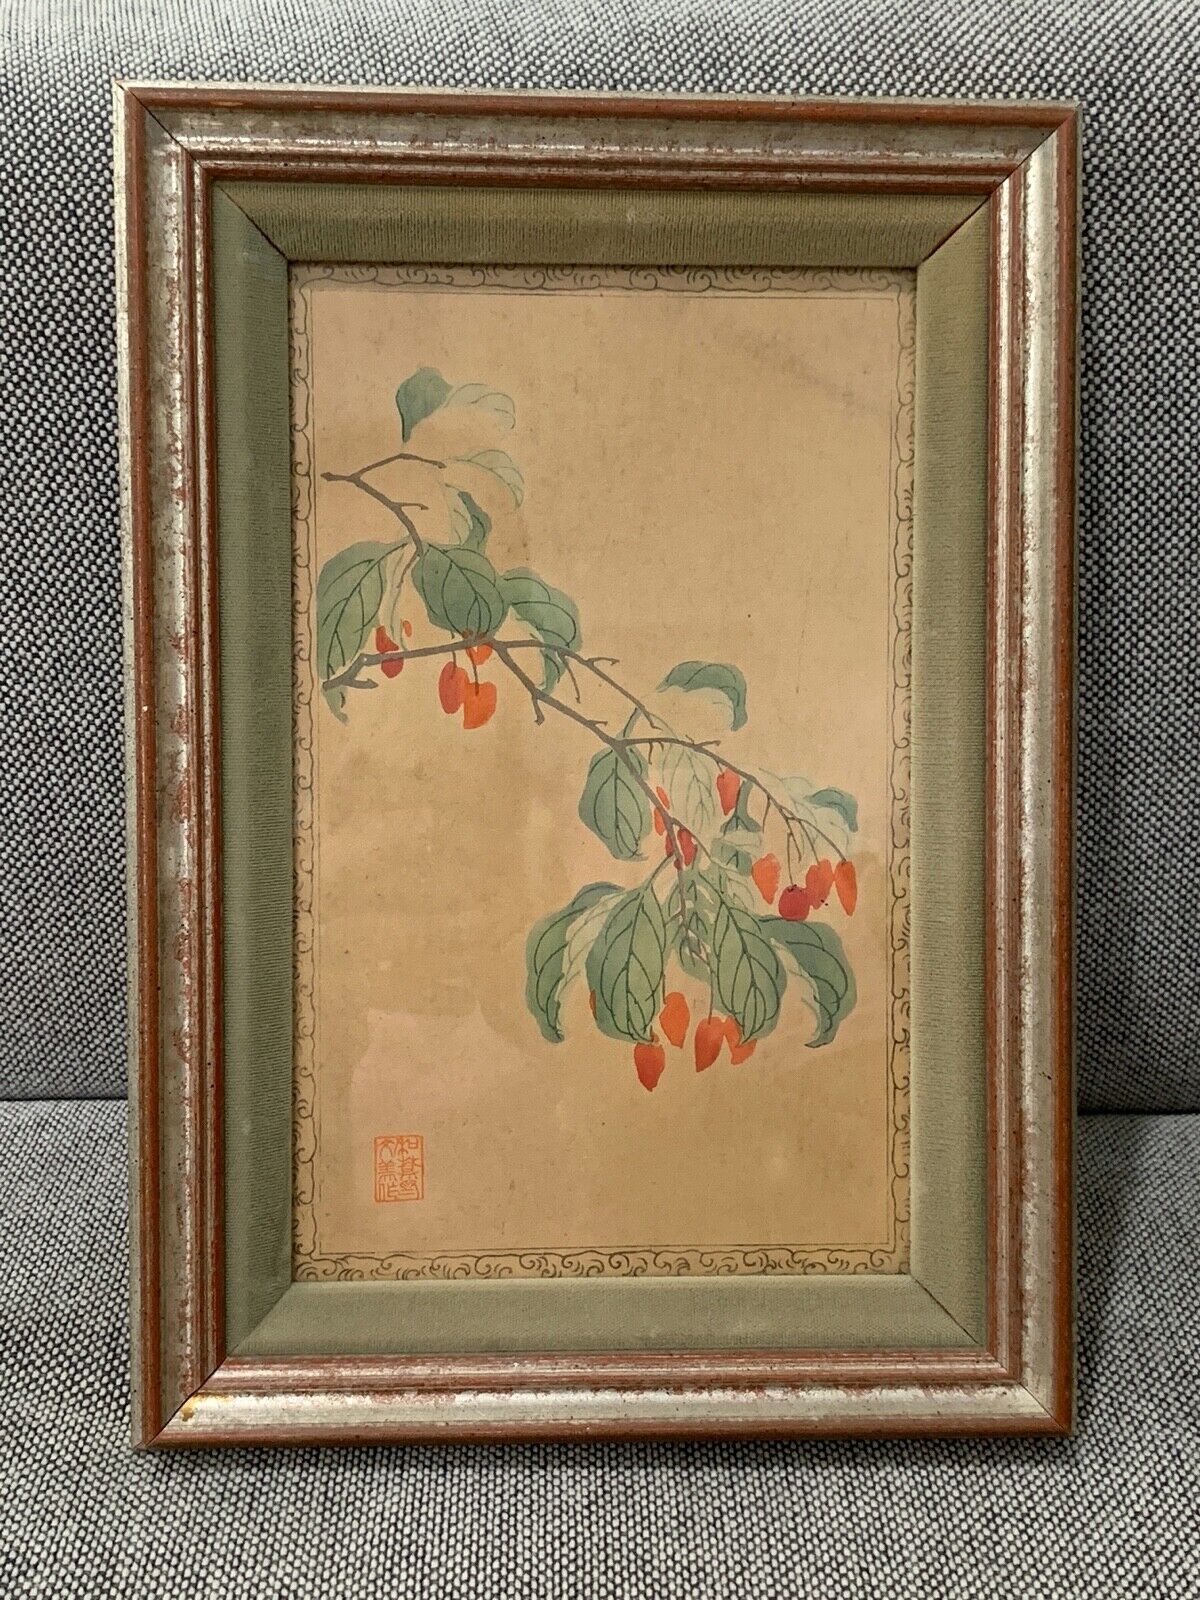 Vtg Possibly Antique Japanese Signed Watercolor Hanging Red Fruit or Vegetable